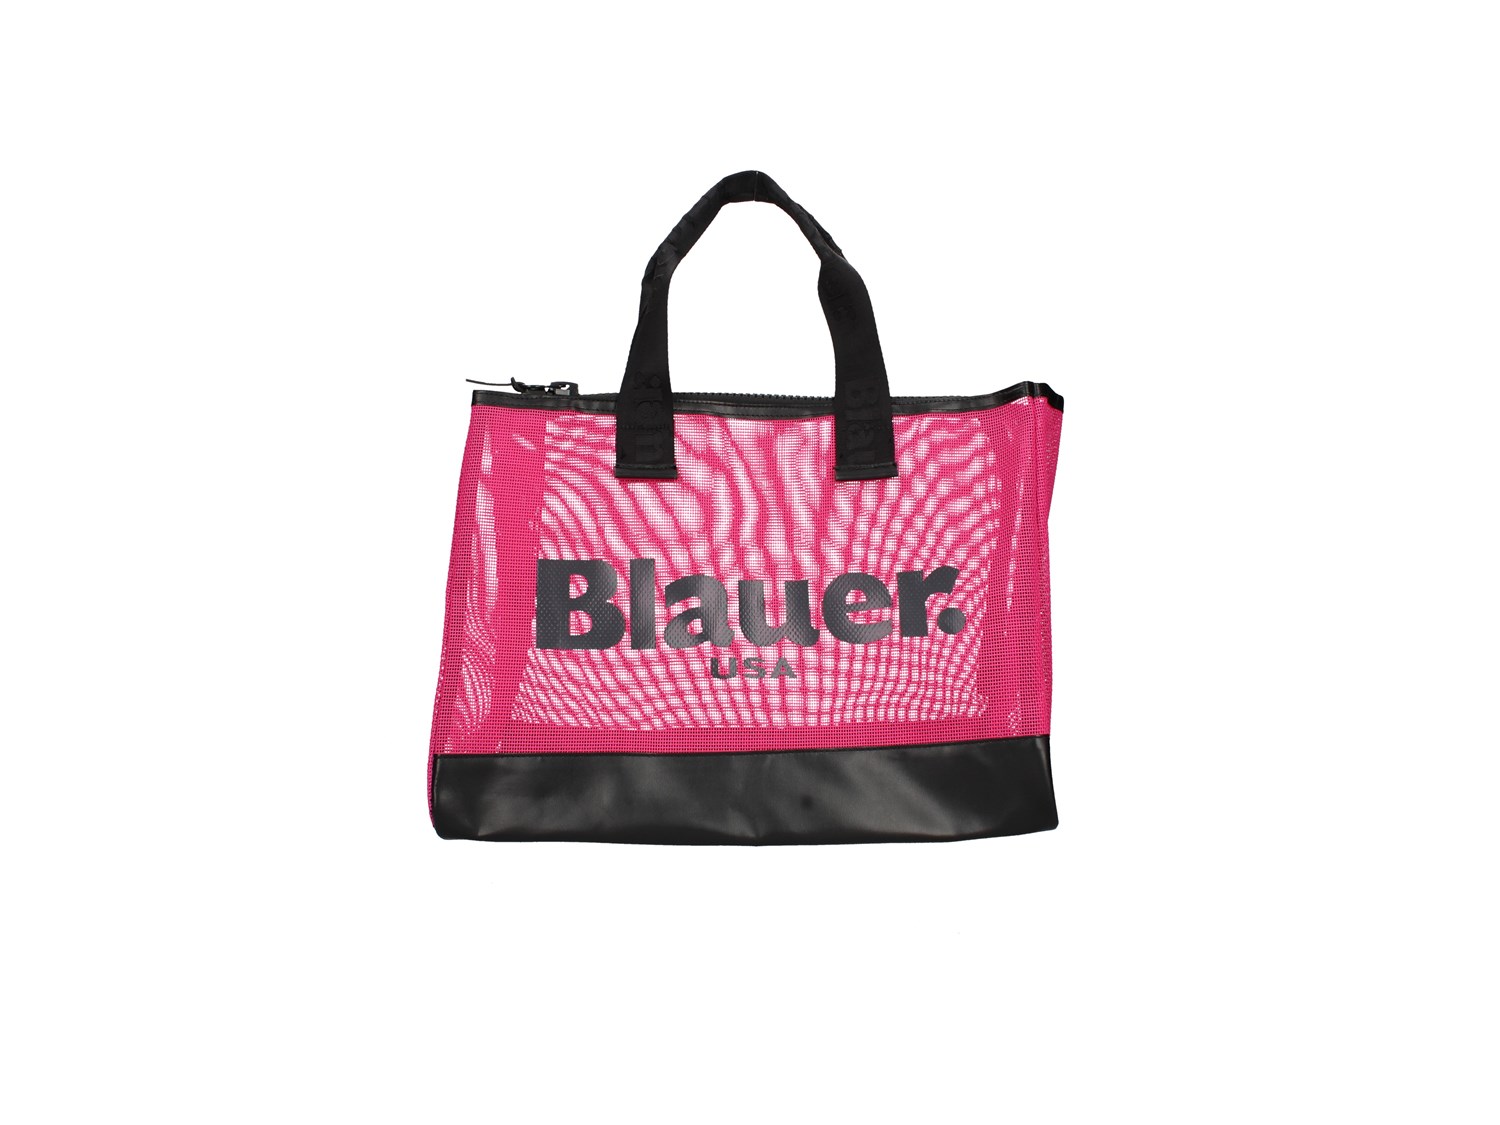 Blauer. U.s.a. S1kara05/sun Fuxia And Black Accessories Women bag